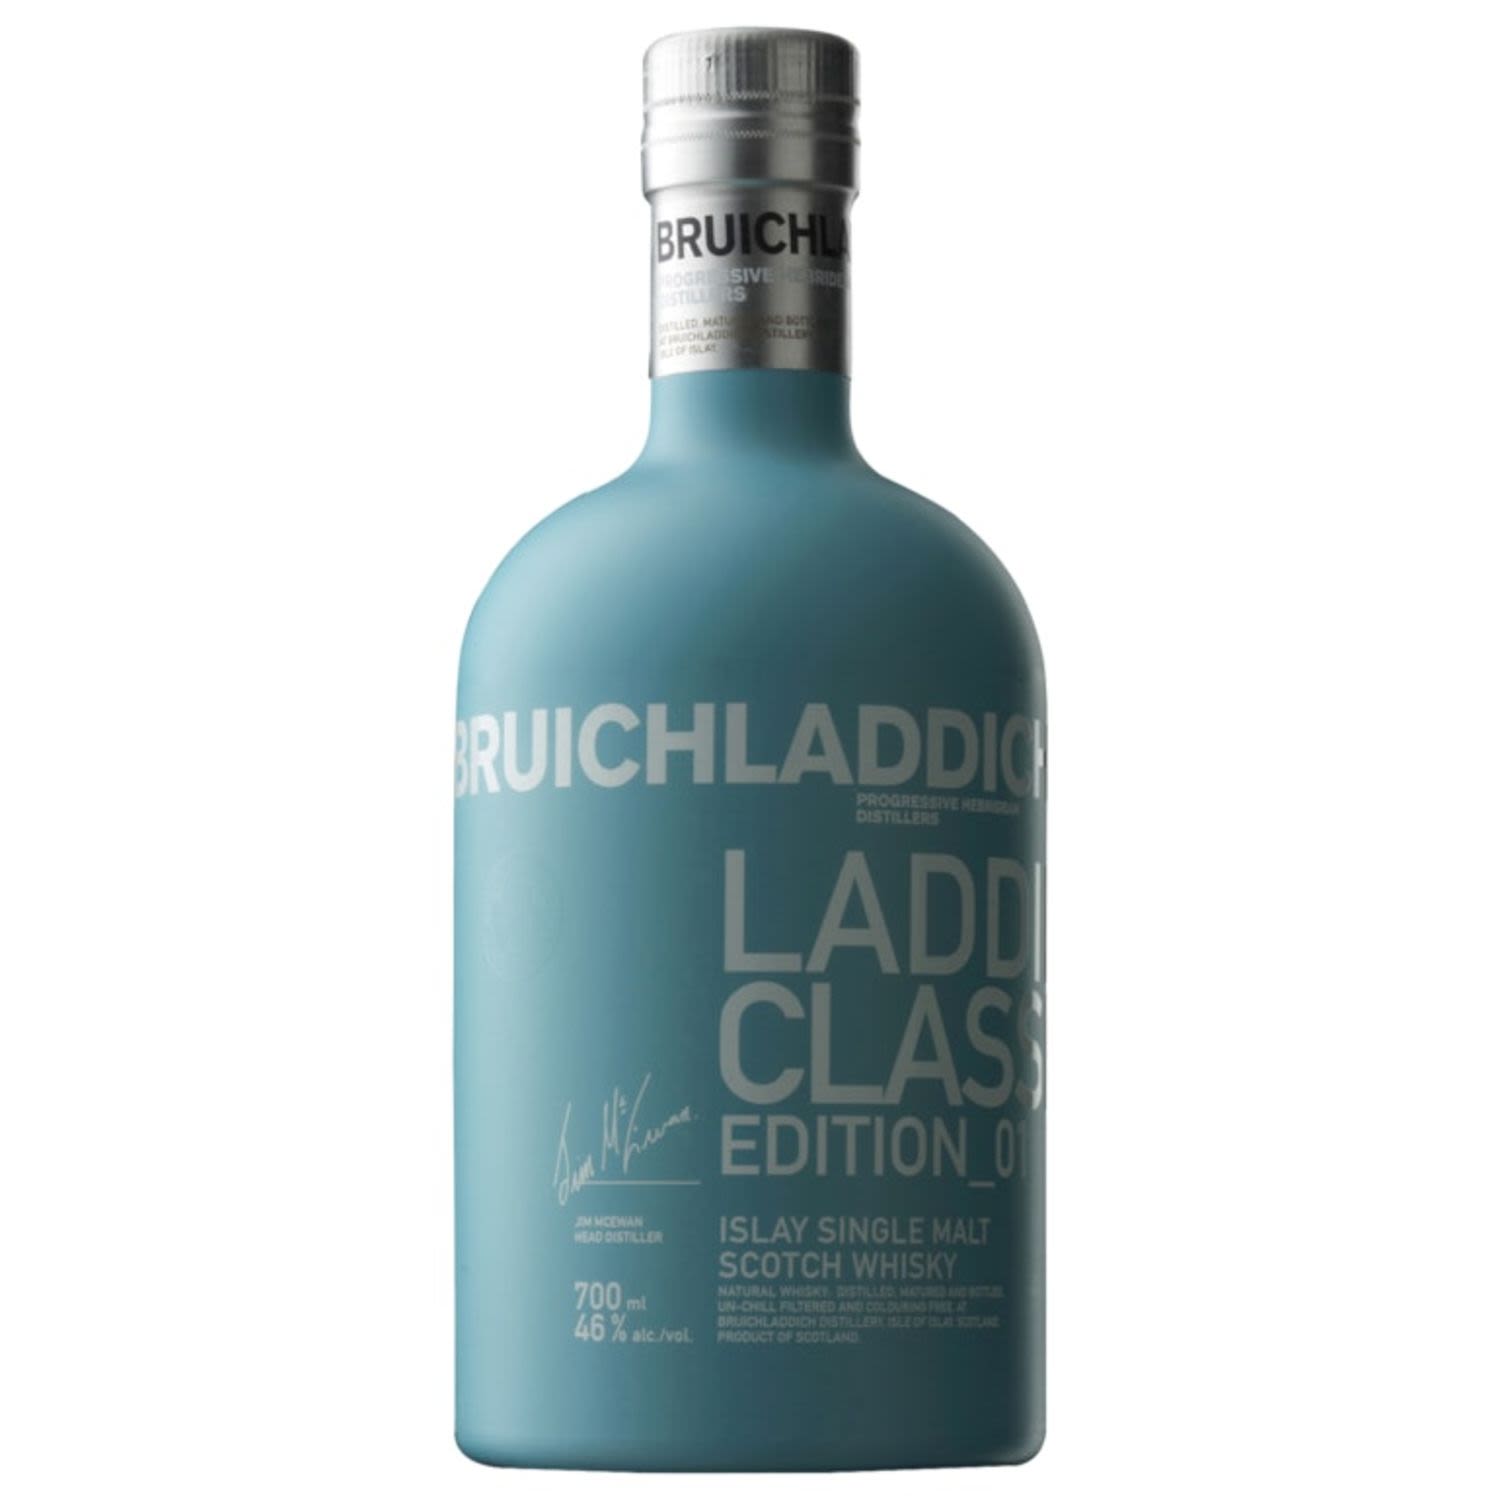 Bruichladdich Laddie Classic Scotch Whisky 700mL Bottle